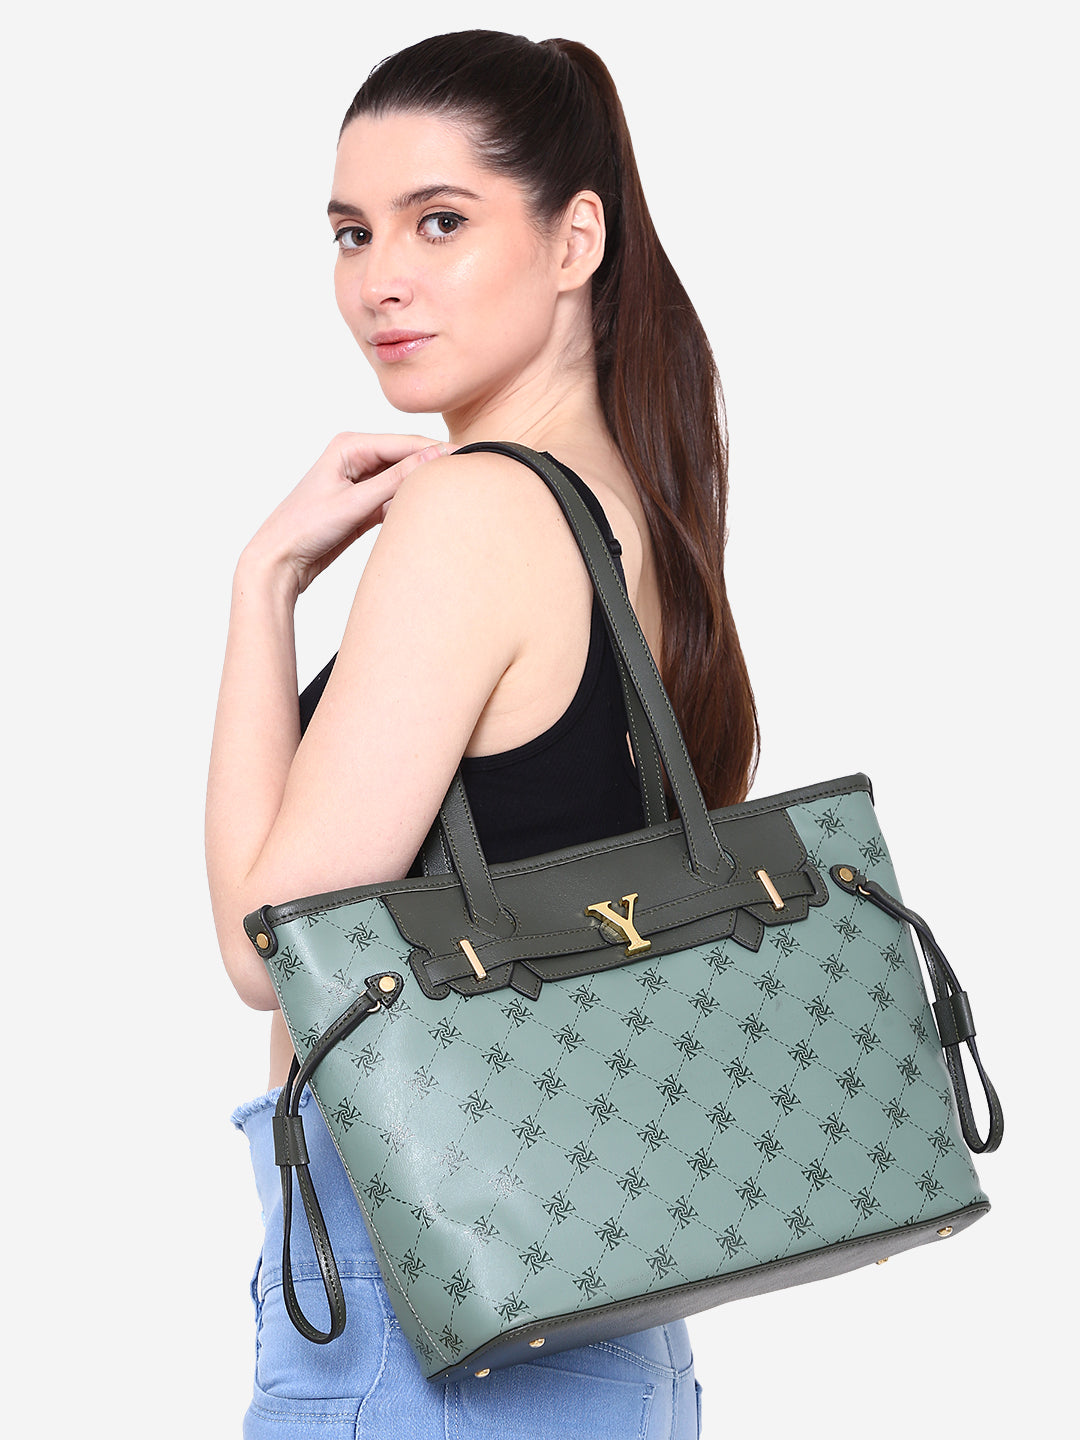 Iconic LV Monogram Women's Bags & Purses